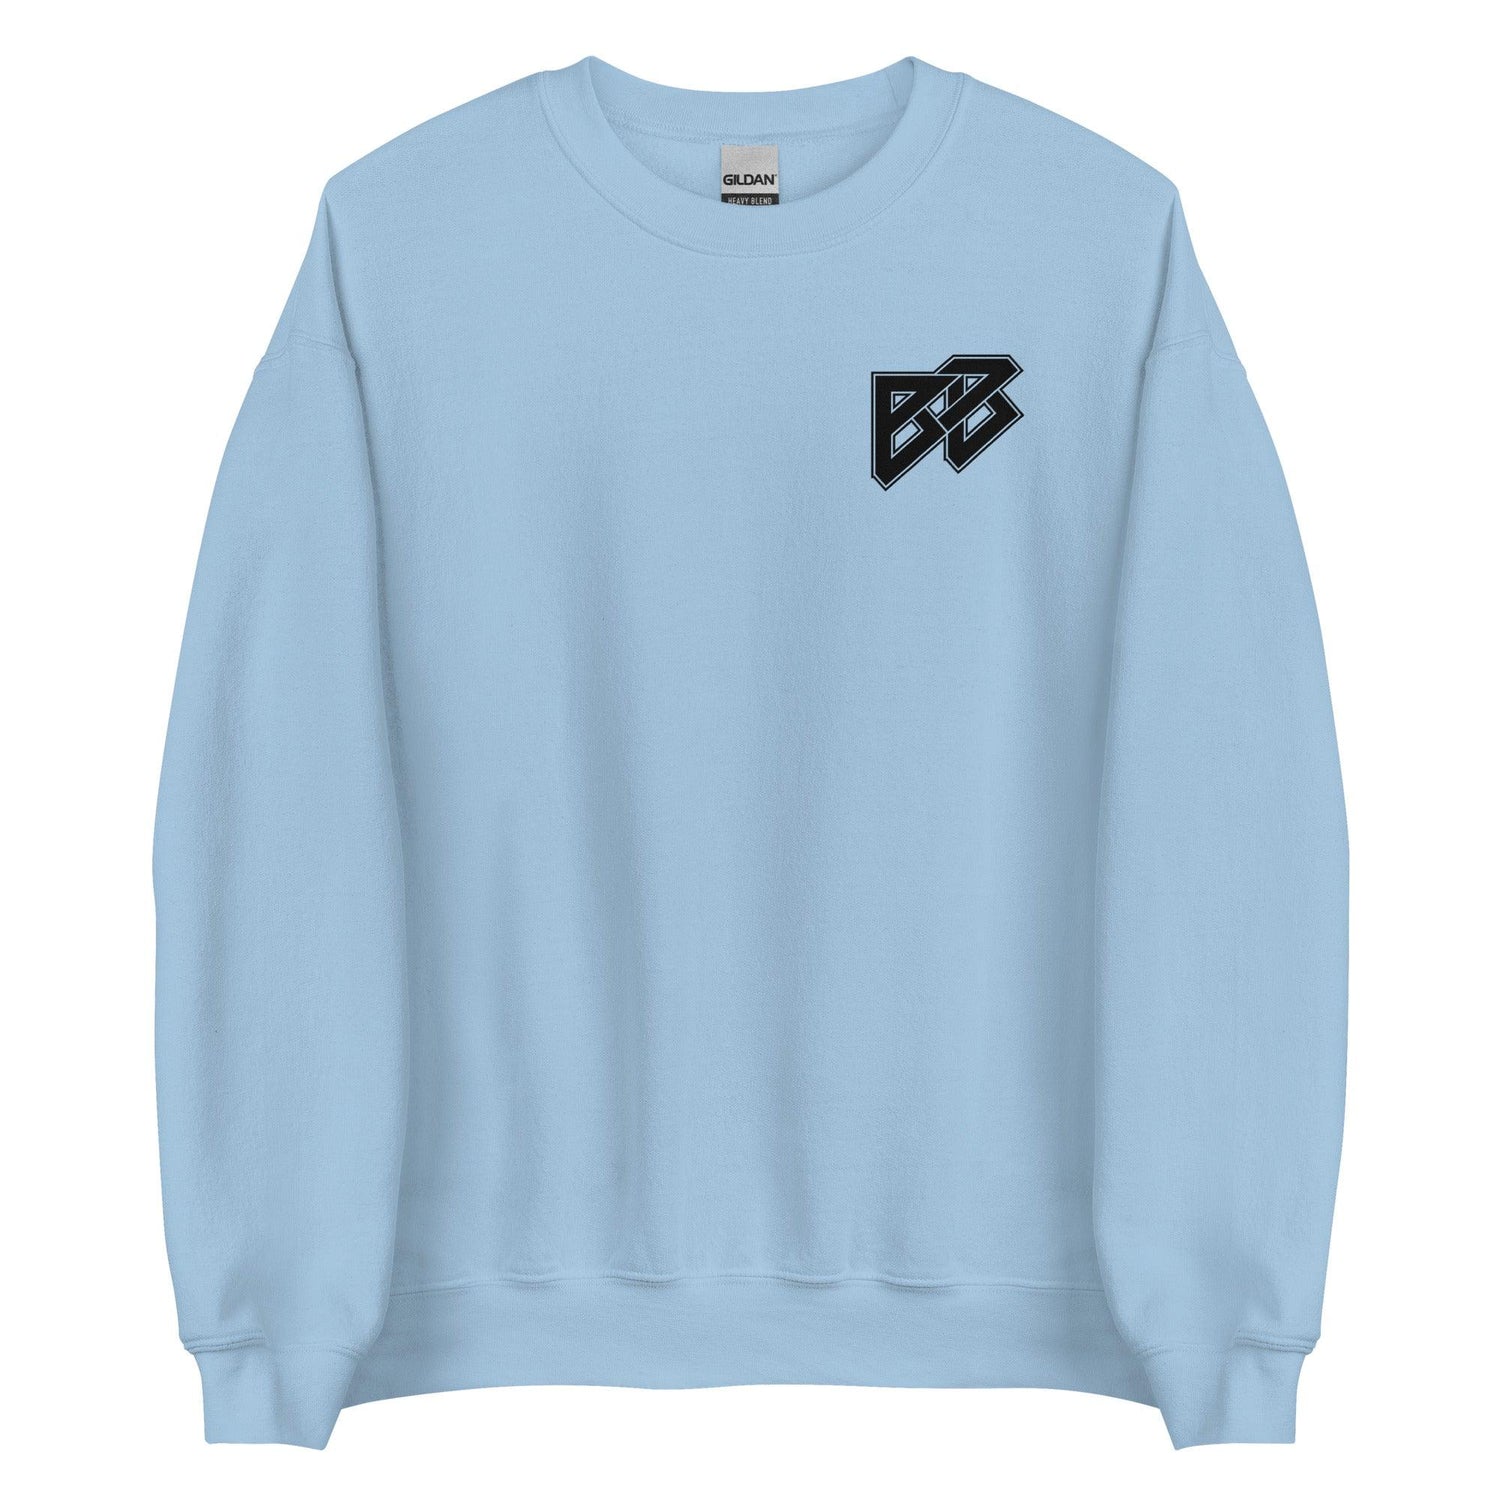 Brad Banks "BB7" Sweatshirt - Fan Arch